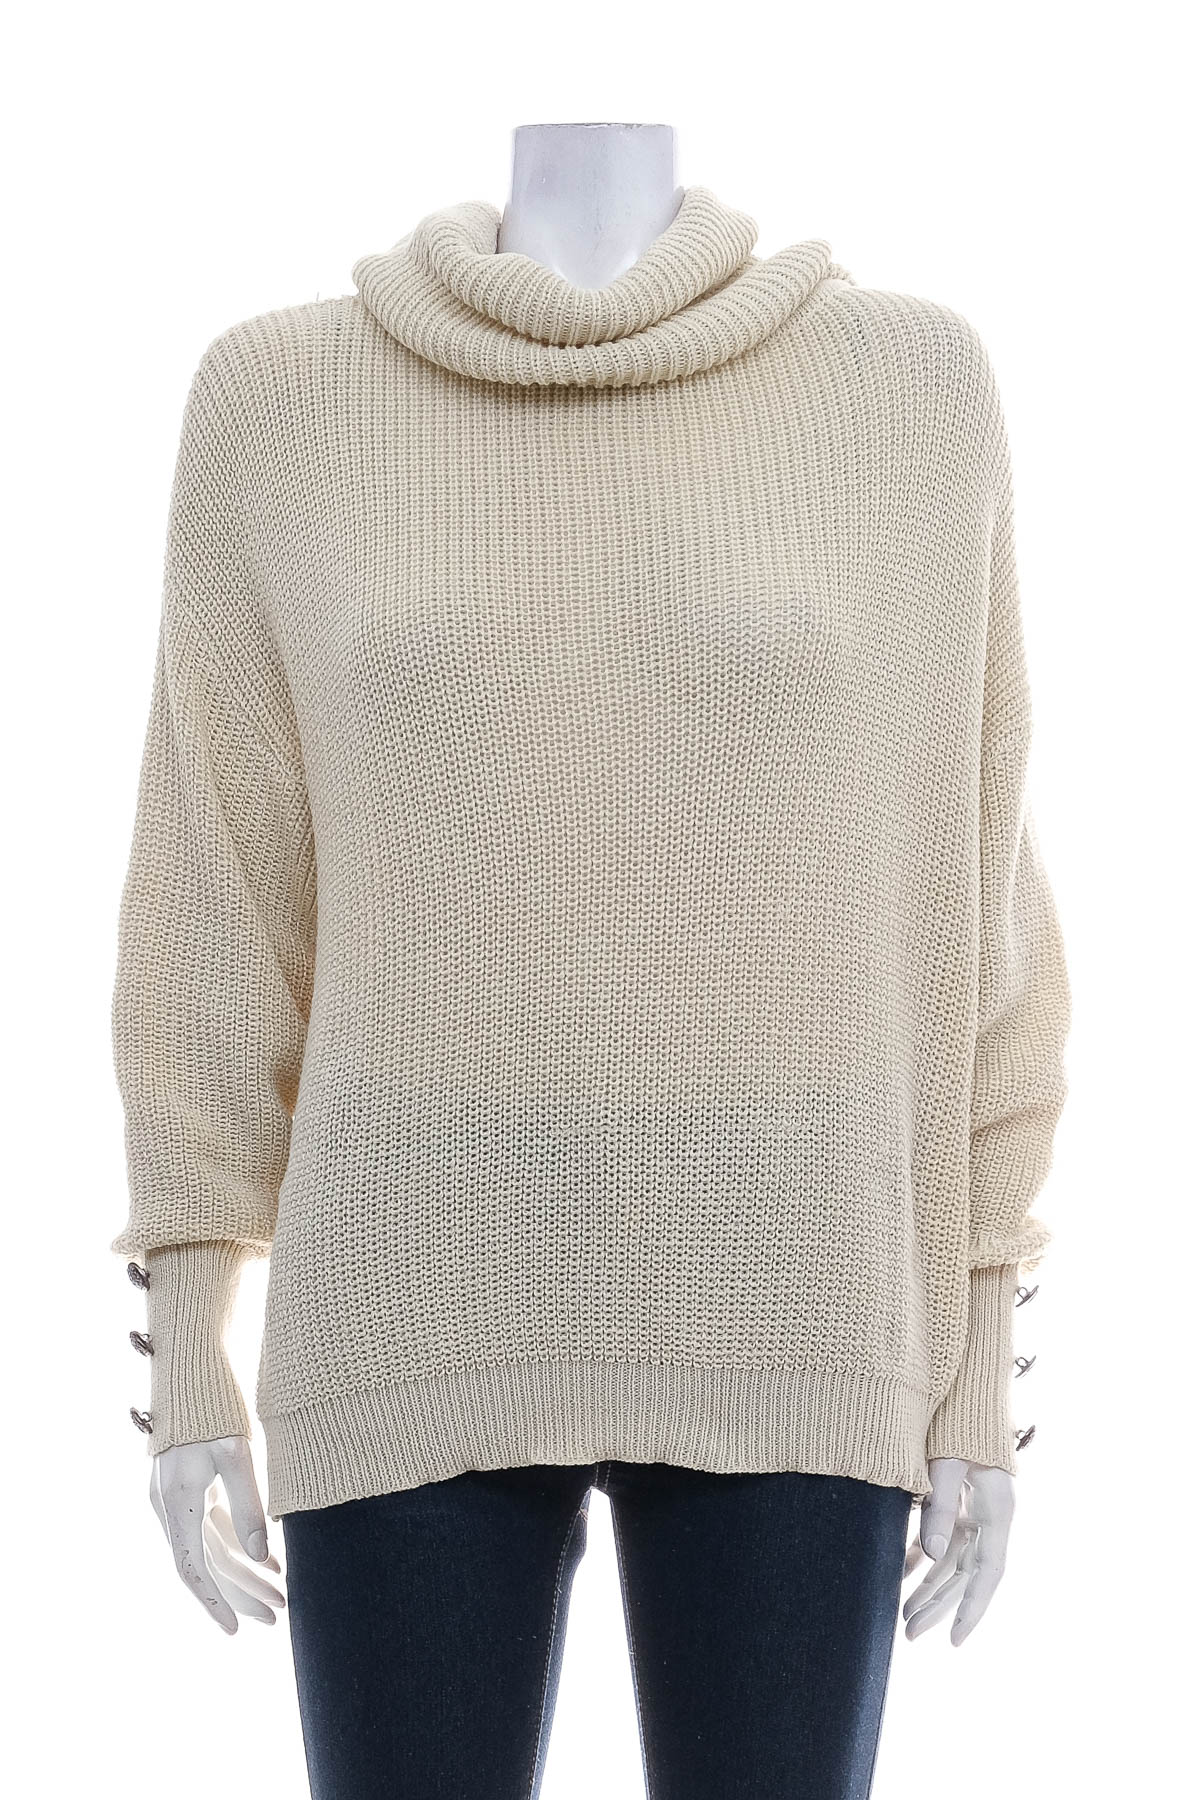 Women's sweater - C.O.Z.Y by Shopcozy - 0